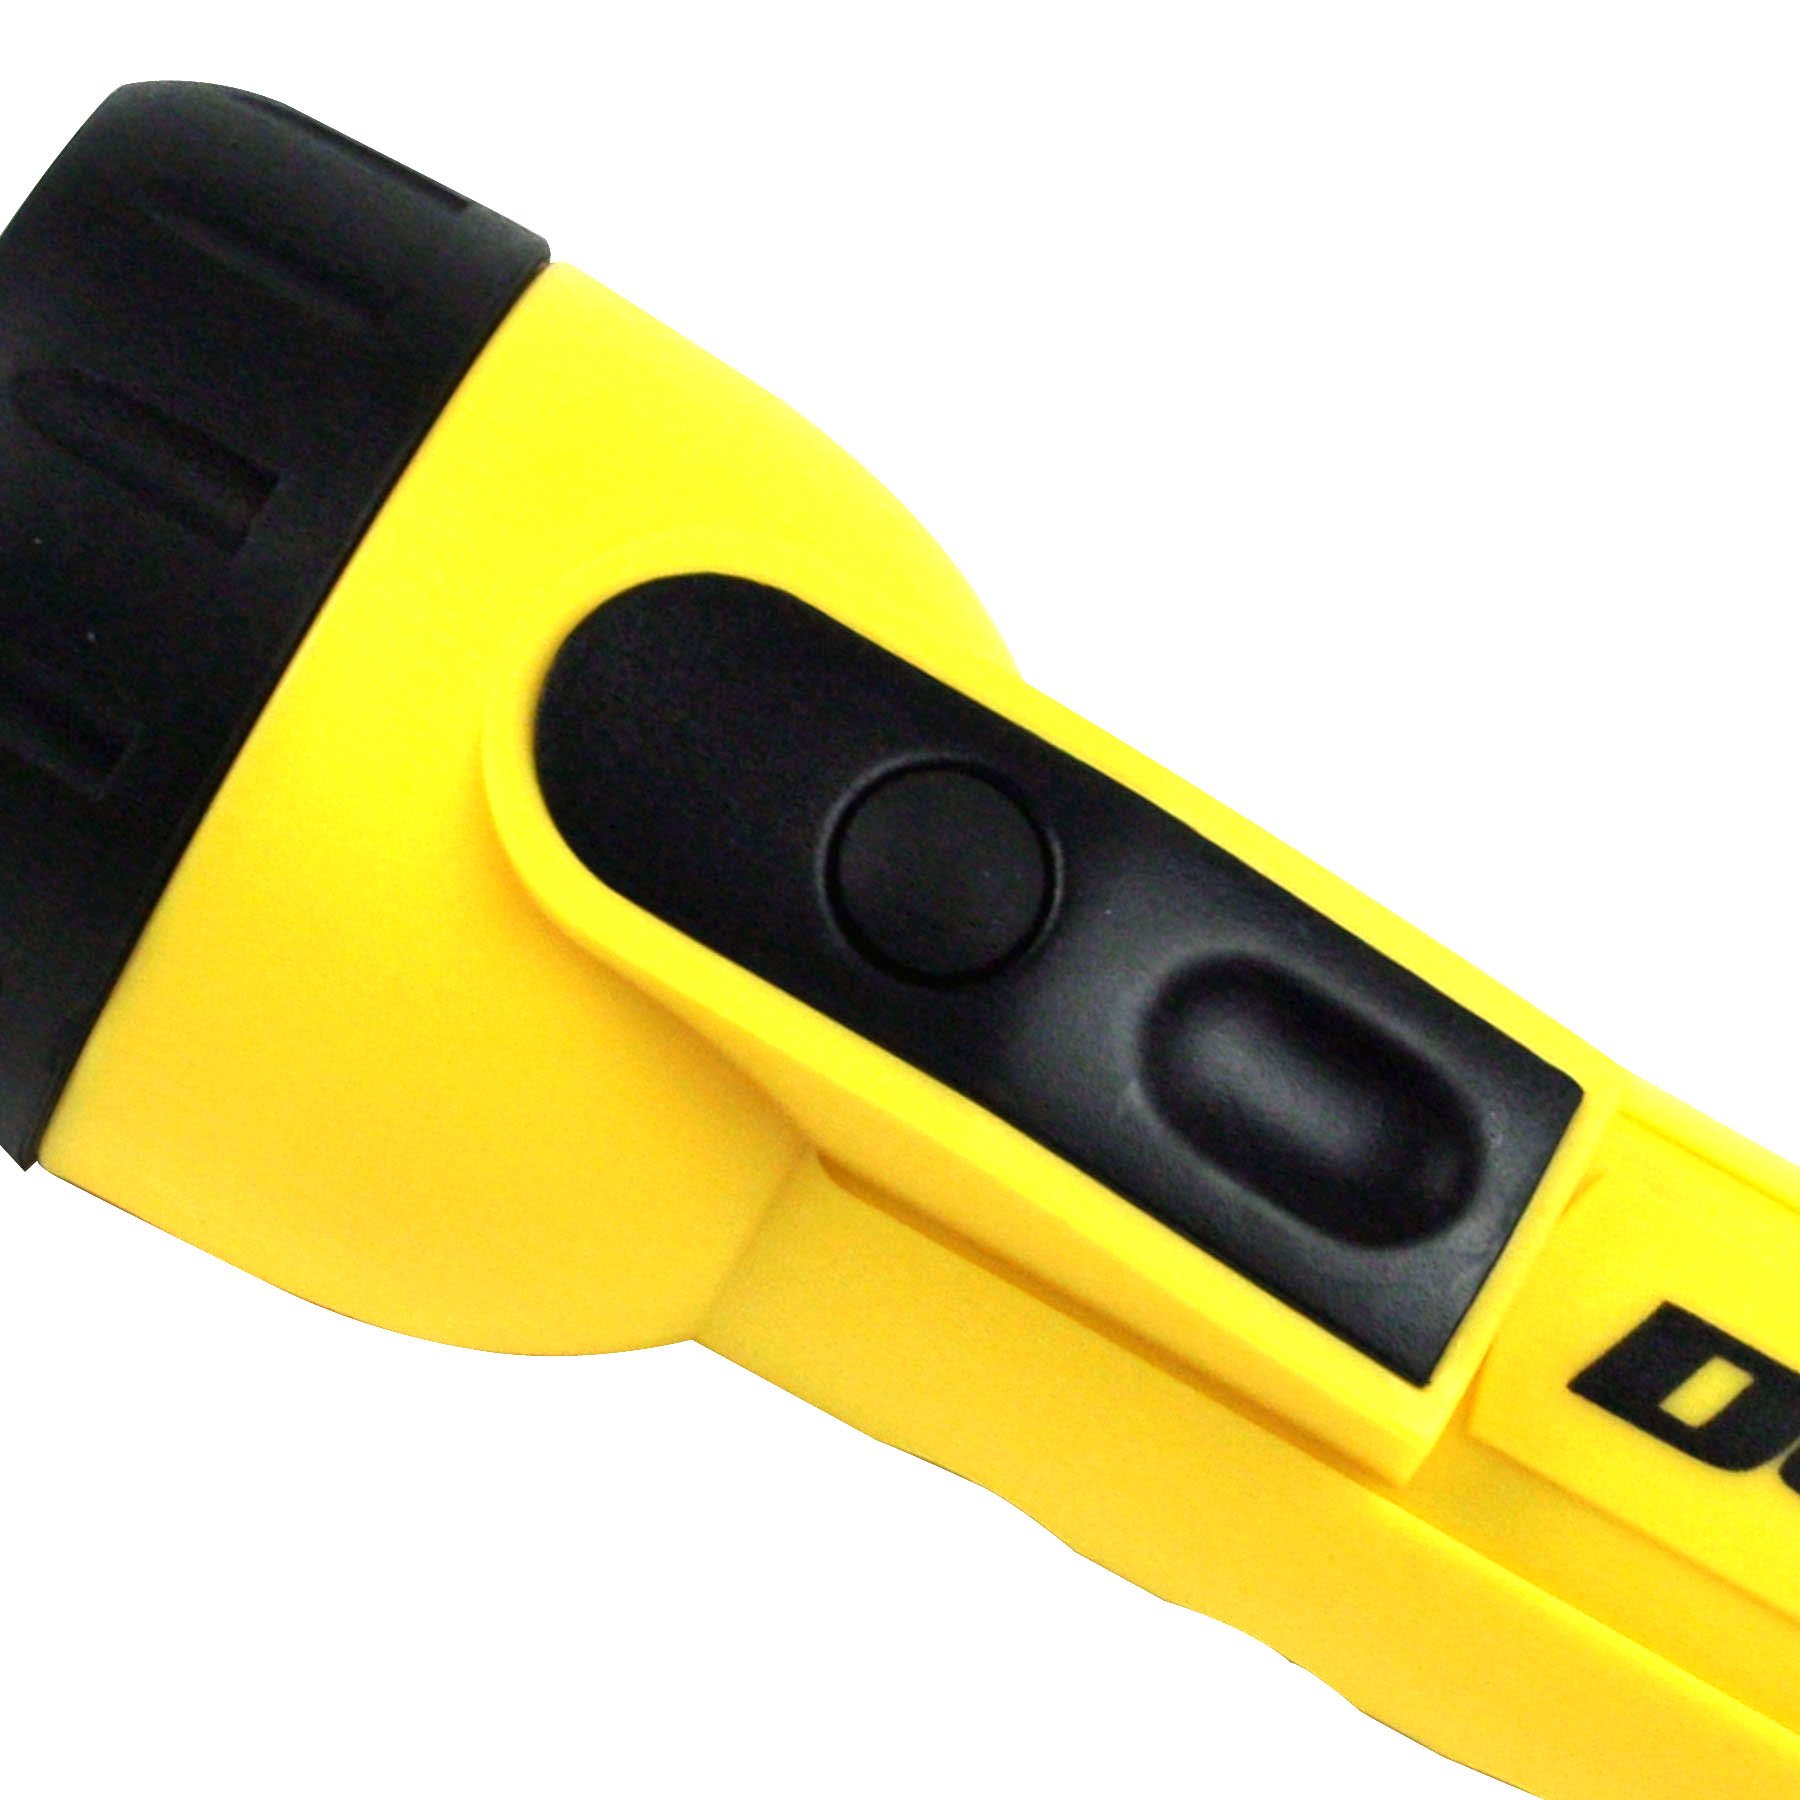 Dorcy Heavy Duty Worklight Flashlight with Batteries, 41-2350 , Green